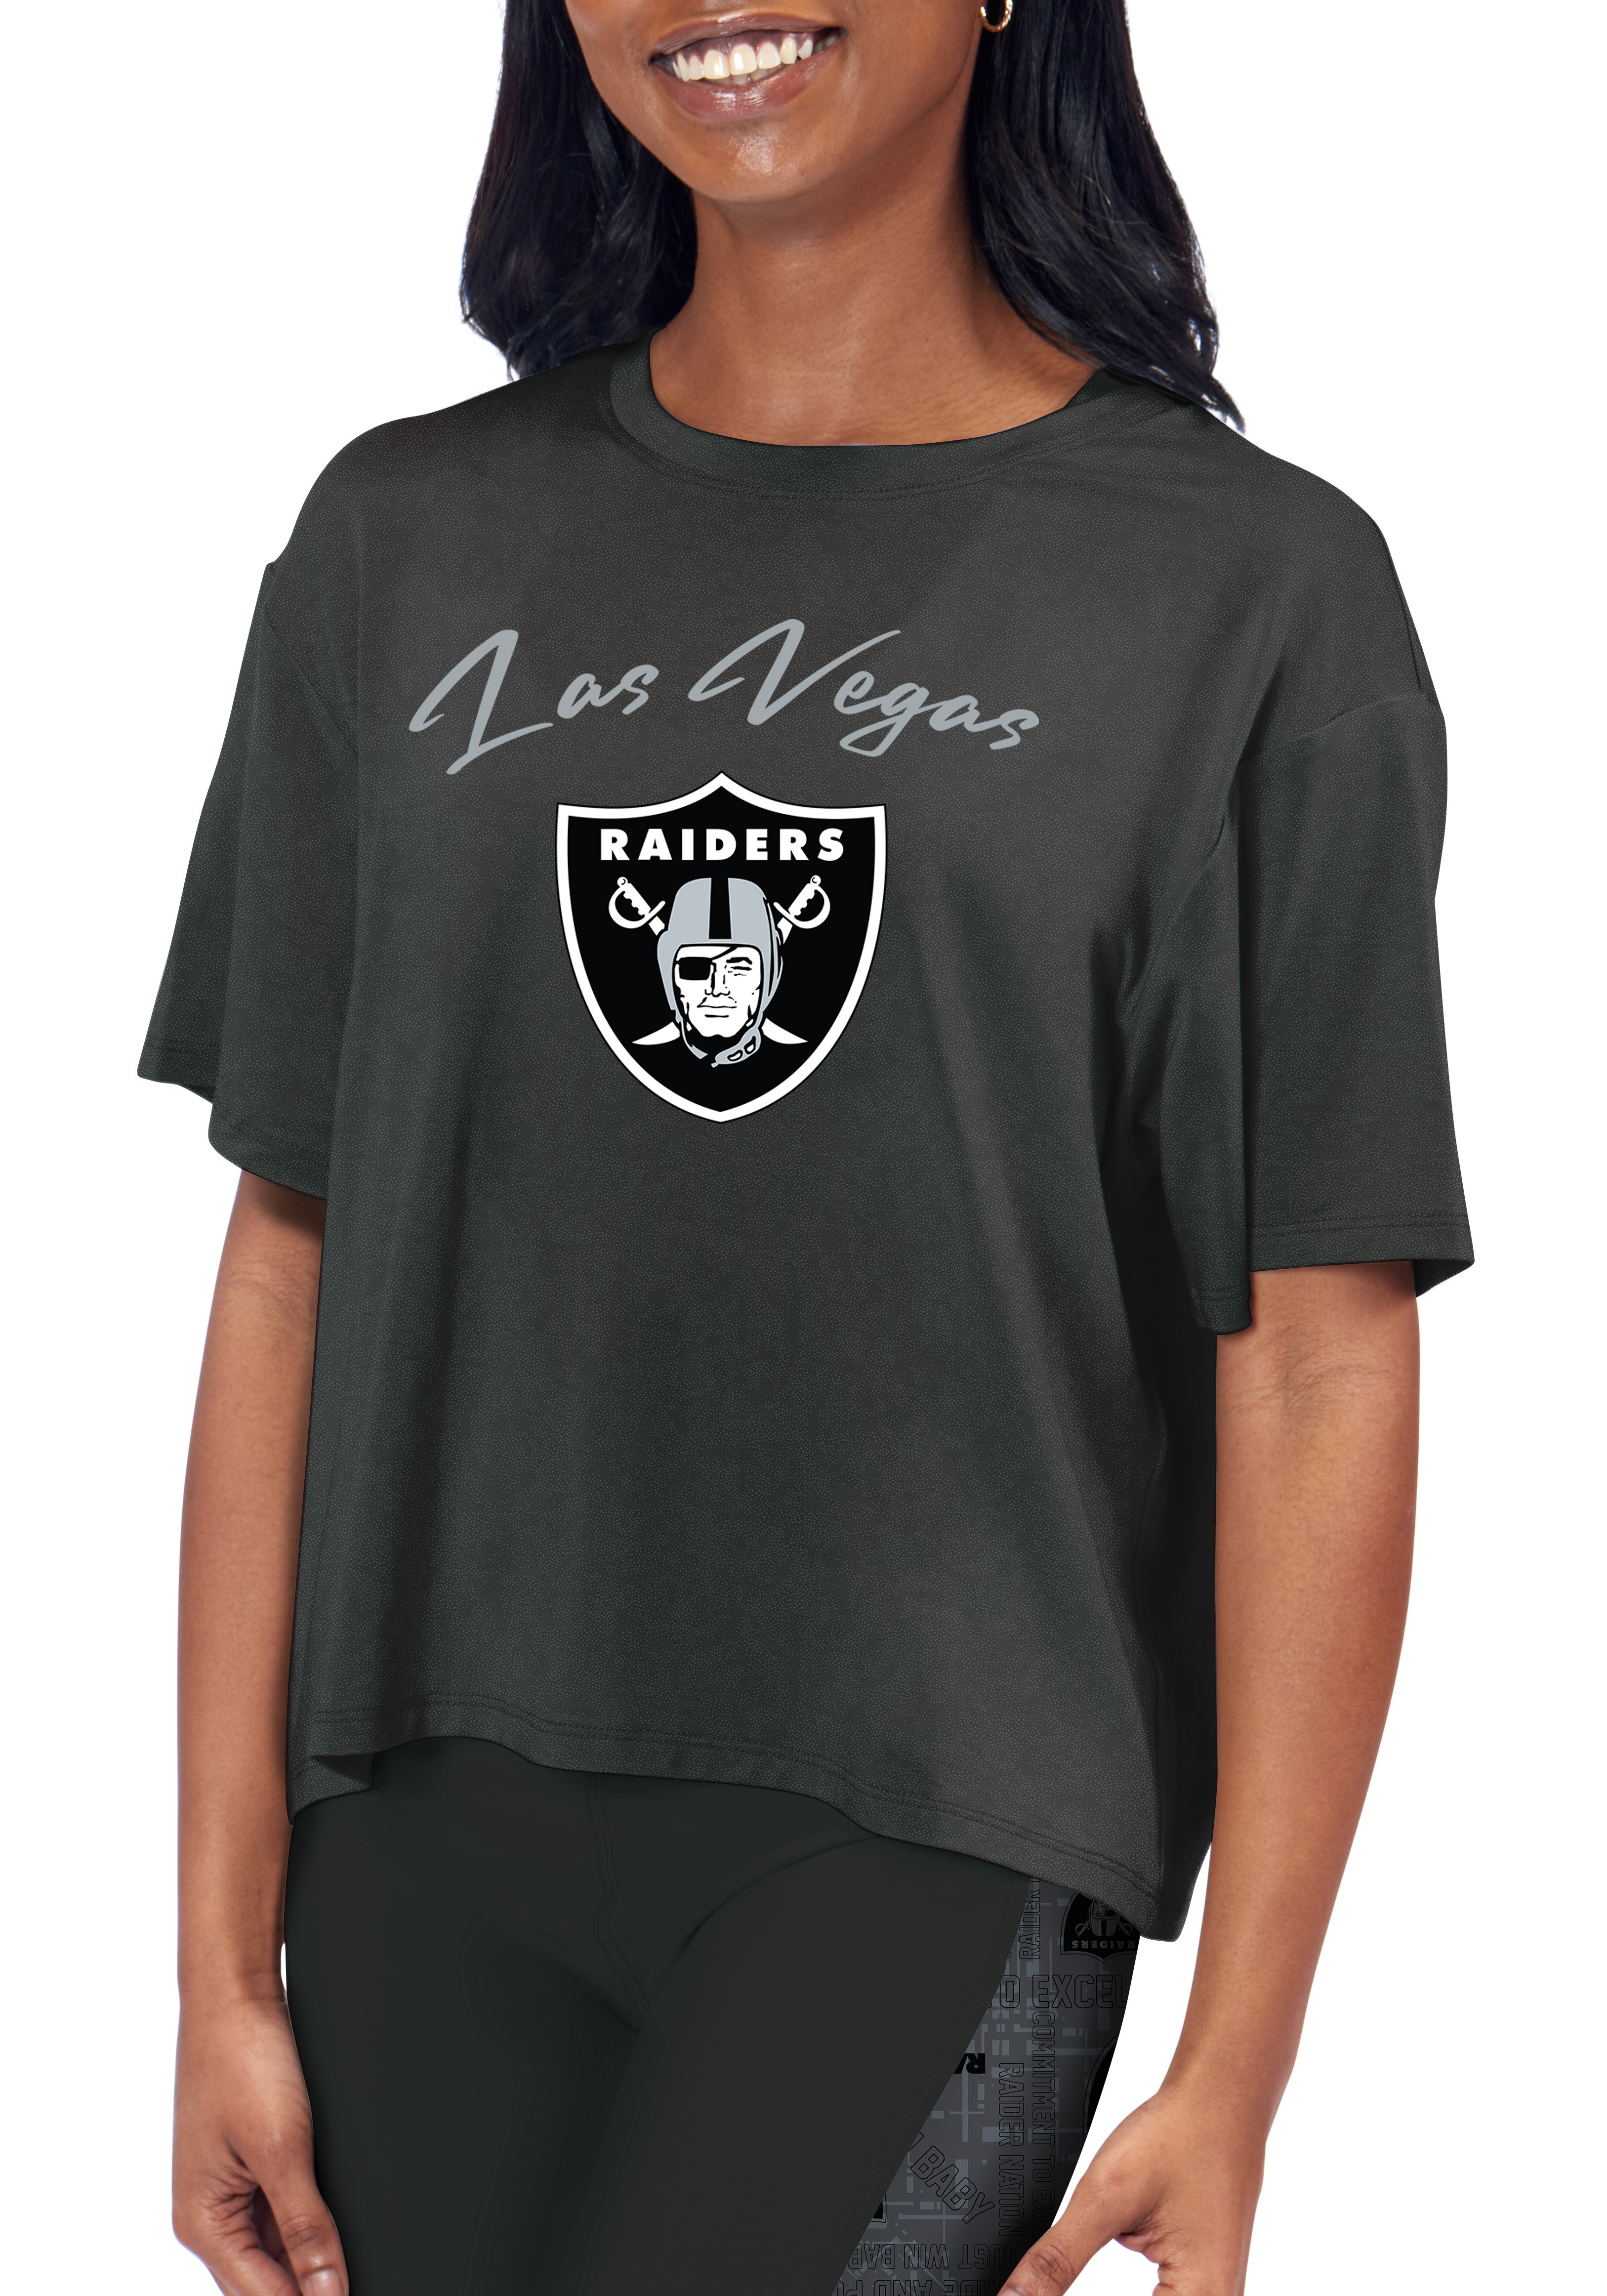 NFL Womens Raiders Jersey Team Apparel Short Sleeve Scoop Neck Size Medium